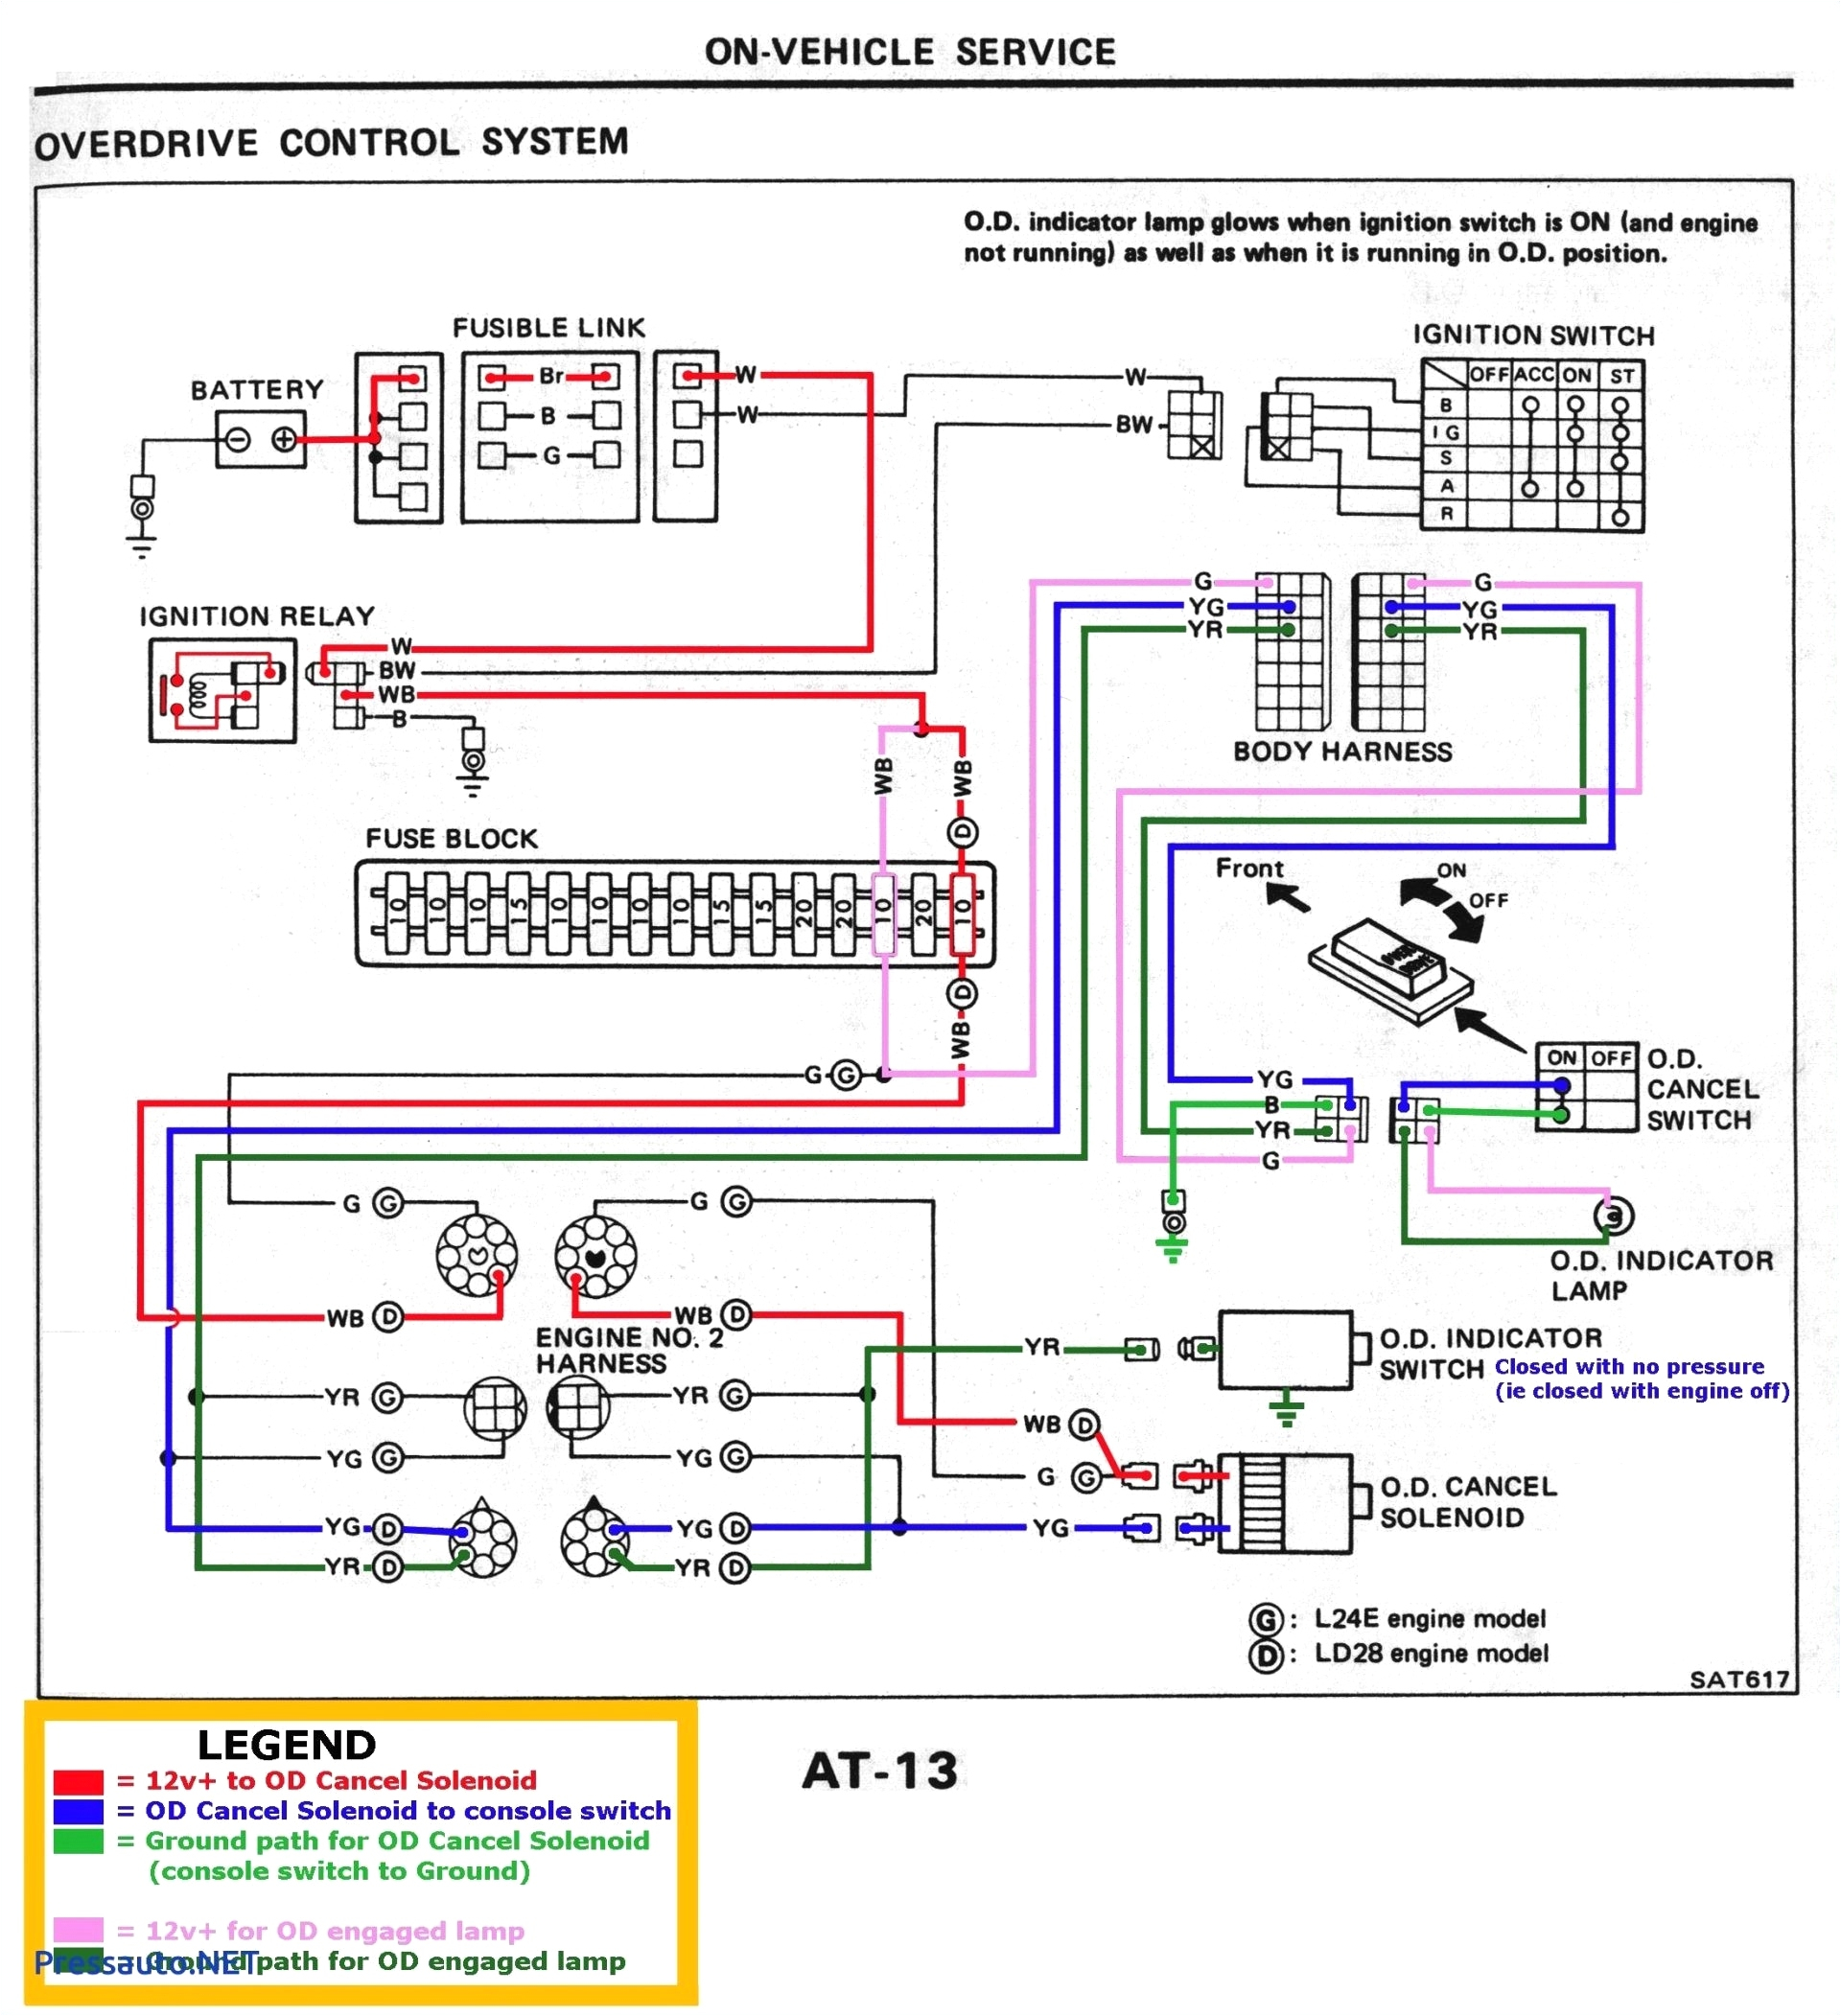 kenwood kdc wiring diagram best of kenwood kdc 155u wiring diagramkenwood kdc wiring diagram luxury kenwood